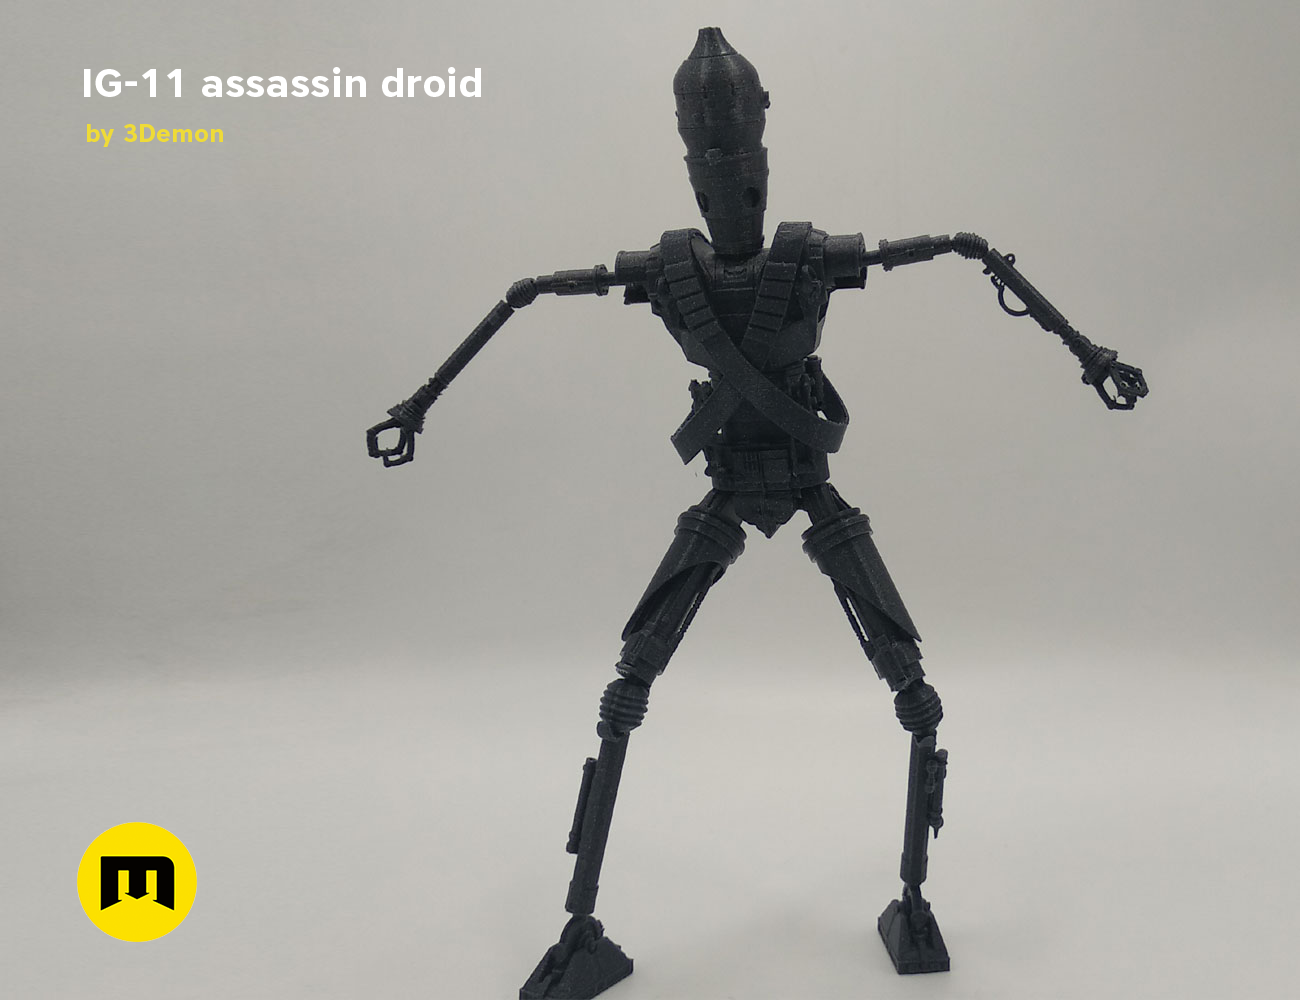 assassin droid ig-11 by 3D-mon